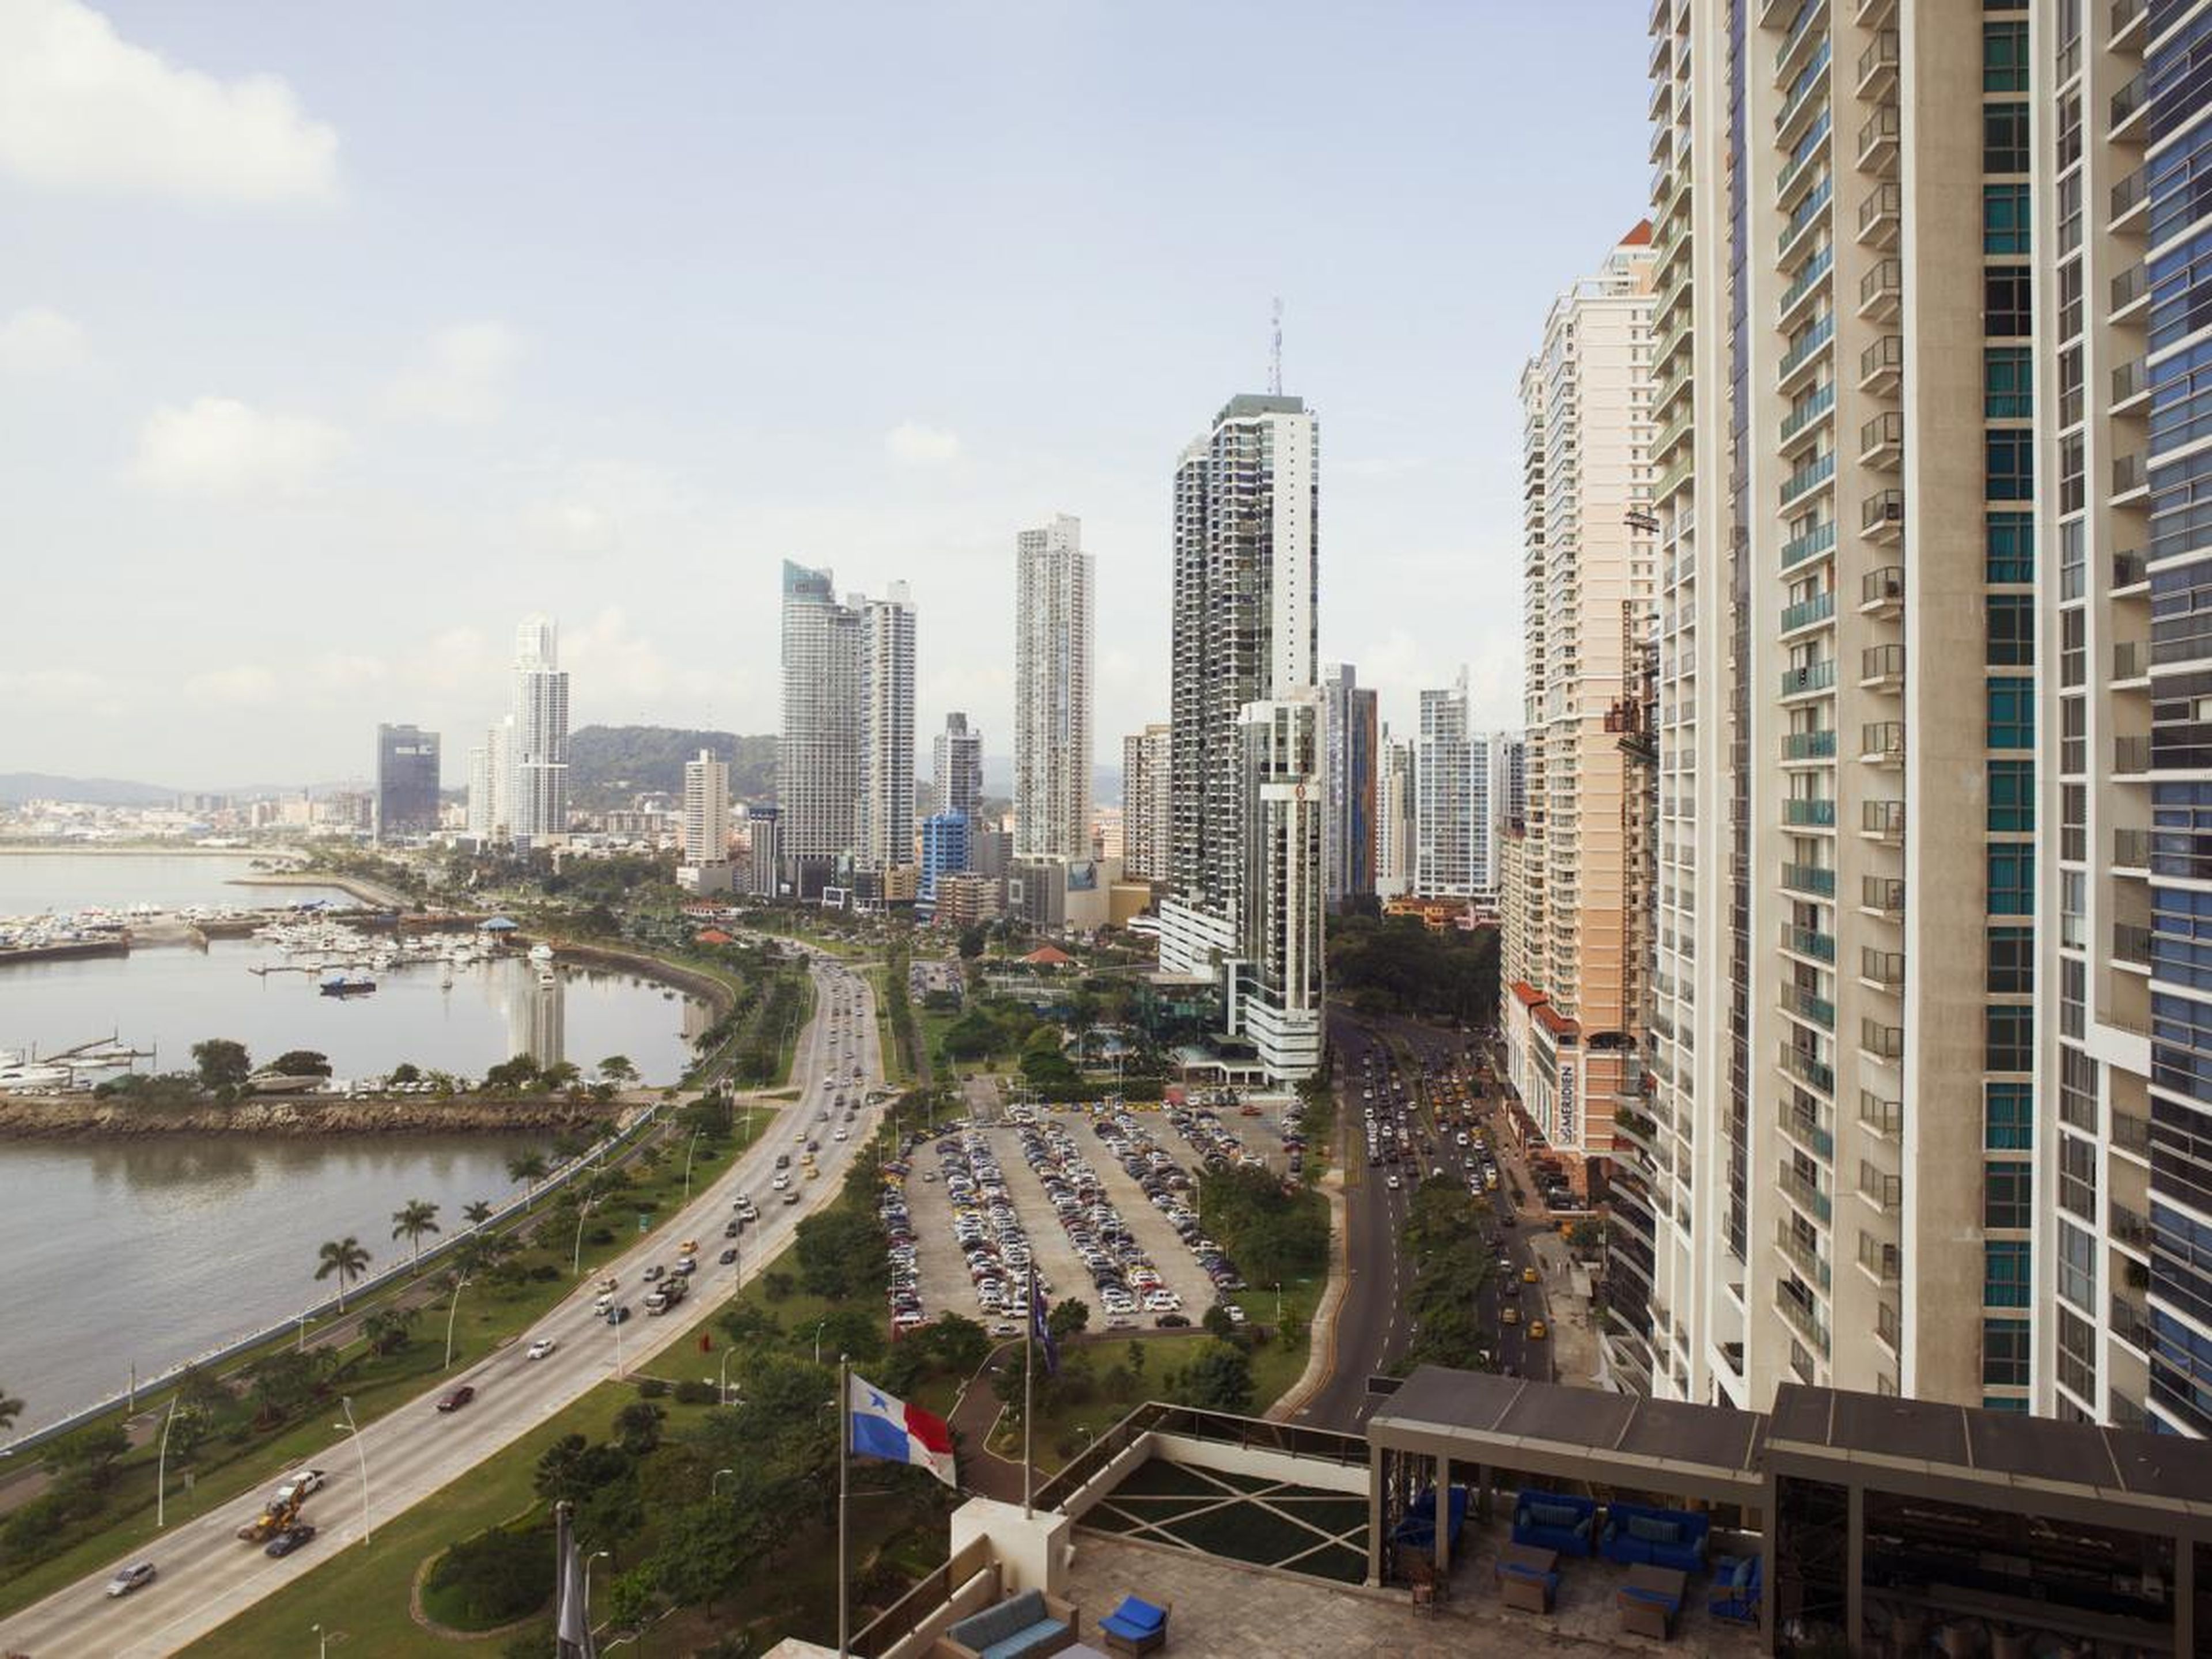 View of Panama City, Panama from the hotel window.